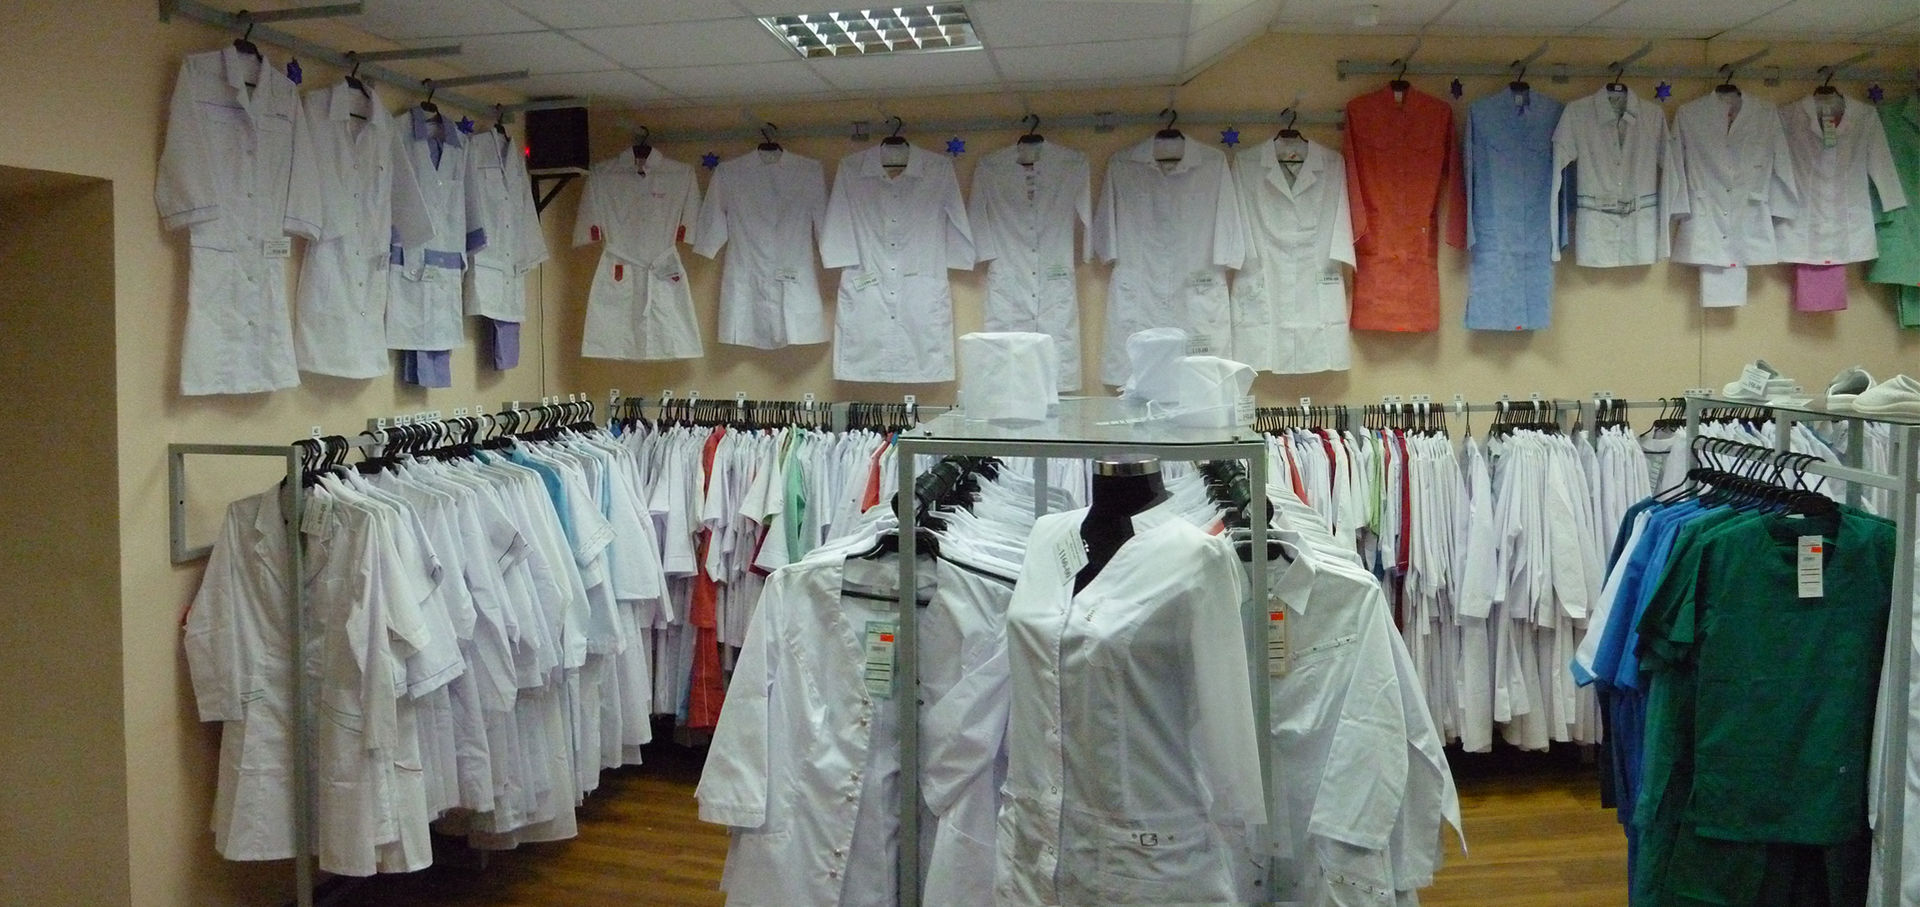 Рубашки В Новосибирске Магазин